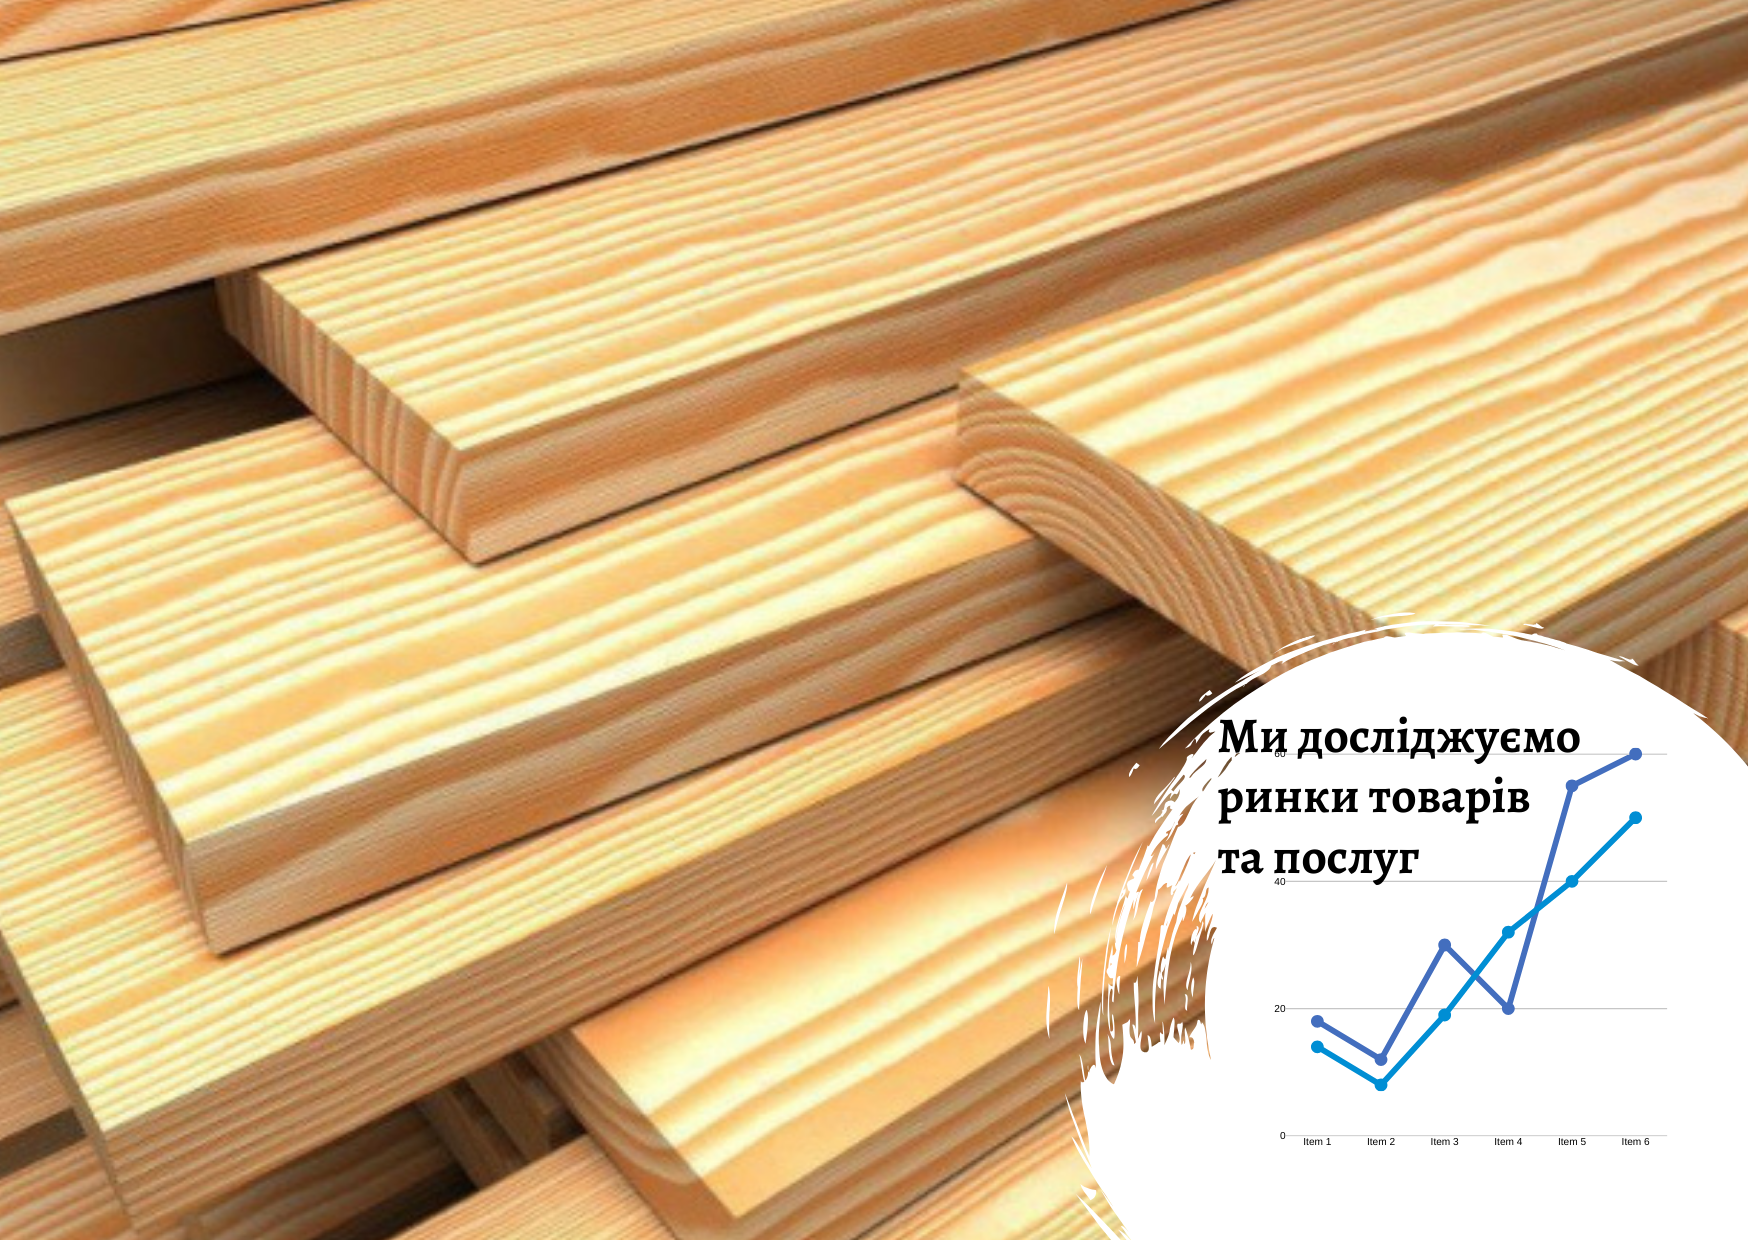 Ukrainian lumber industry analysis - market research report